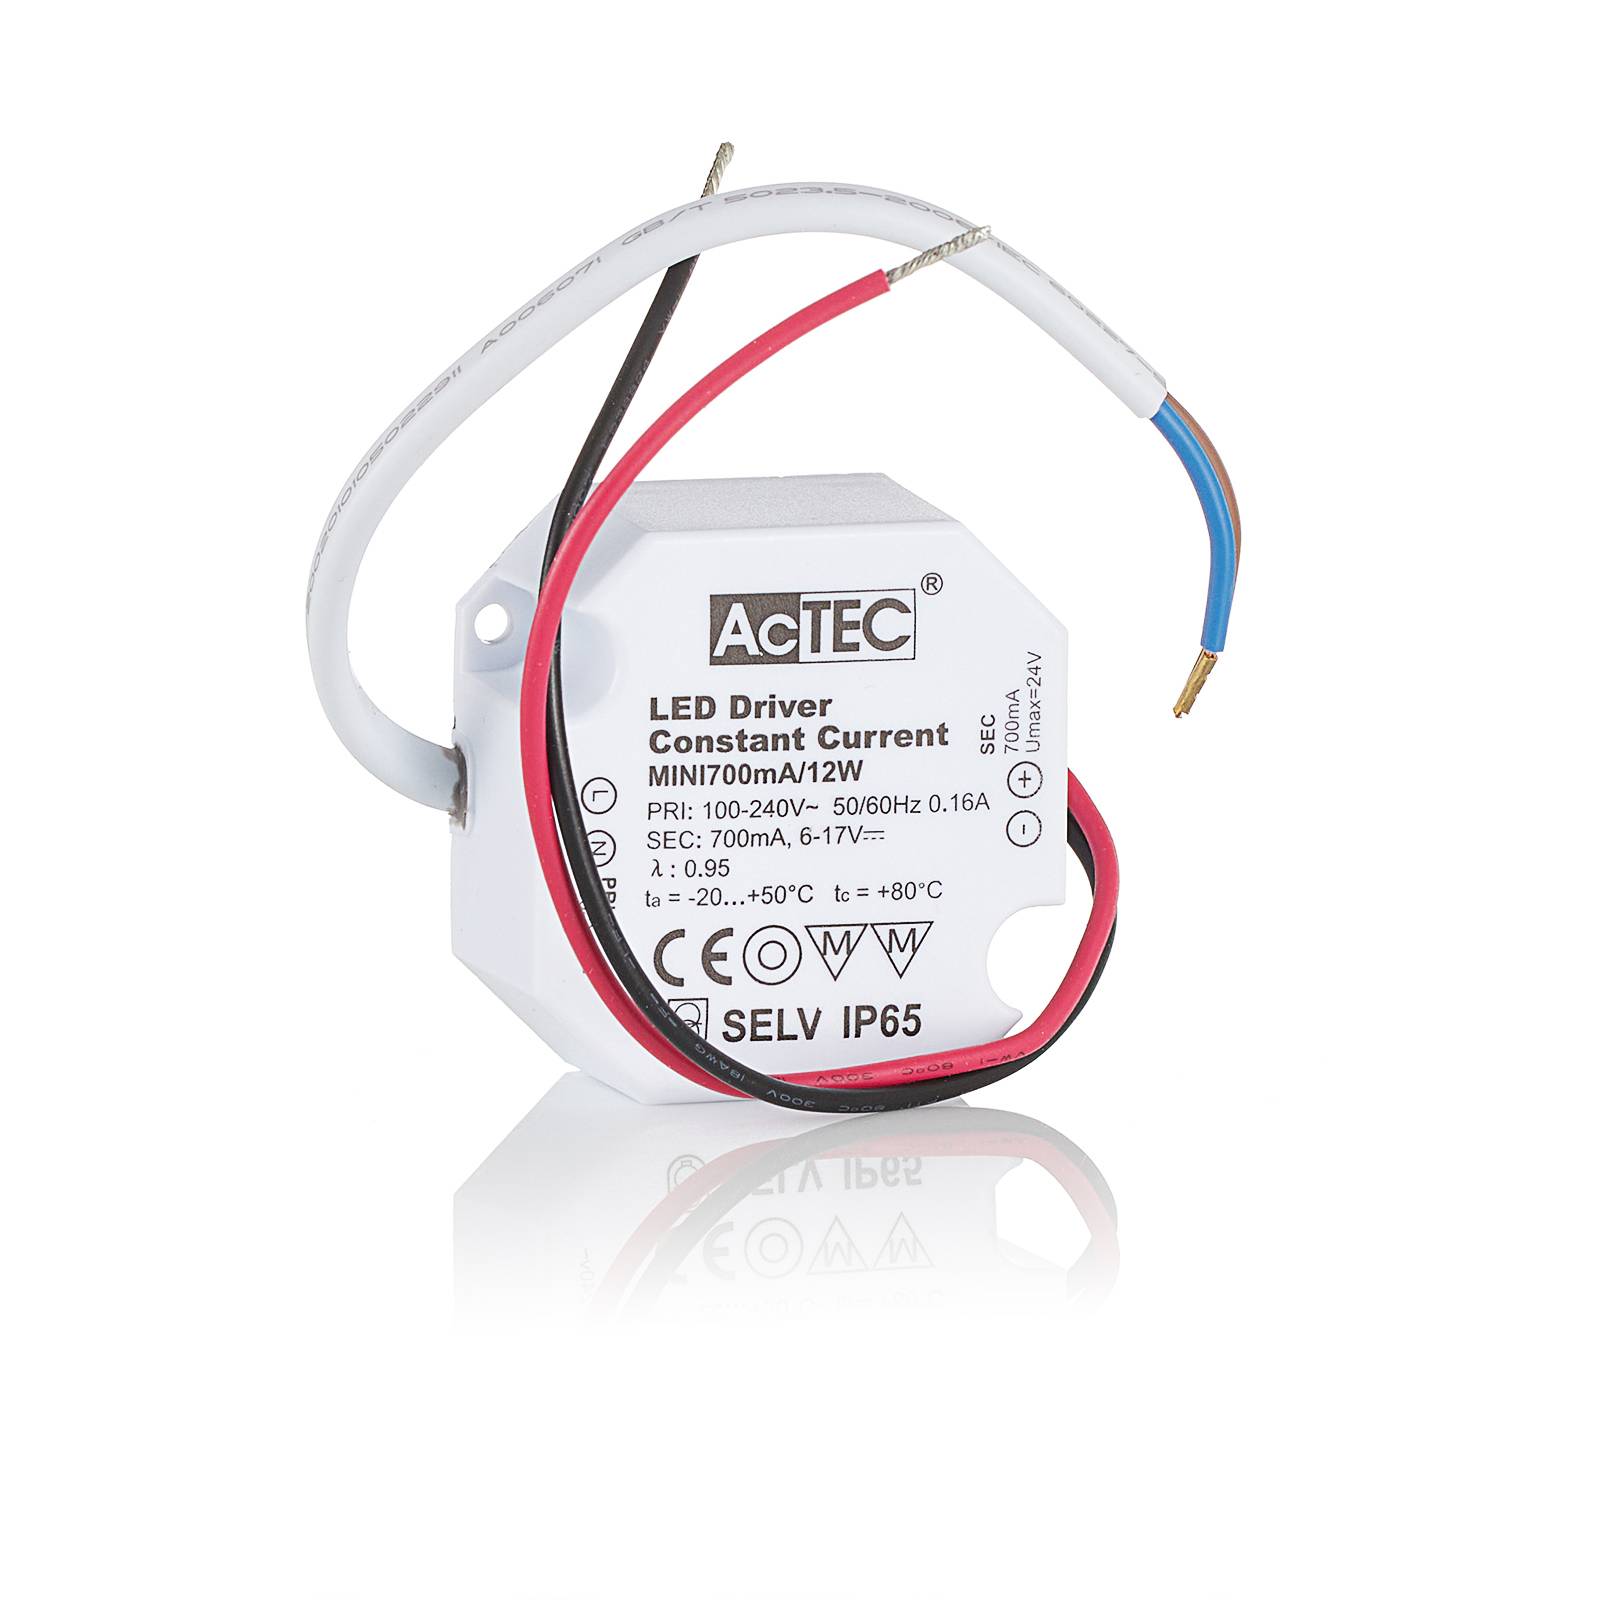 Image of AcTEC Mini driver LED CC 700 mA, 12 W, IP65 4251911721683